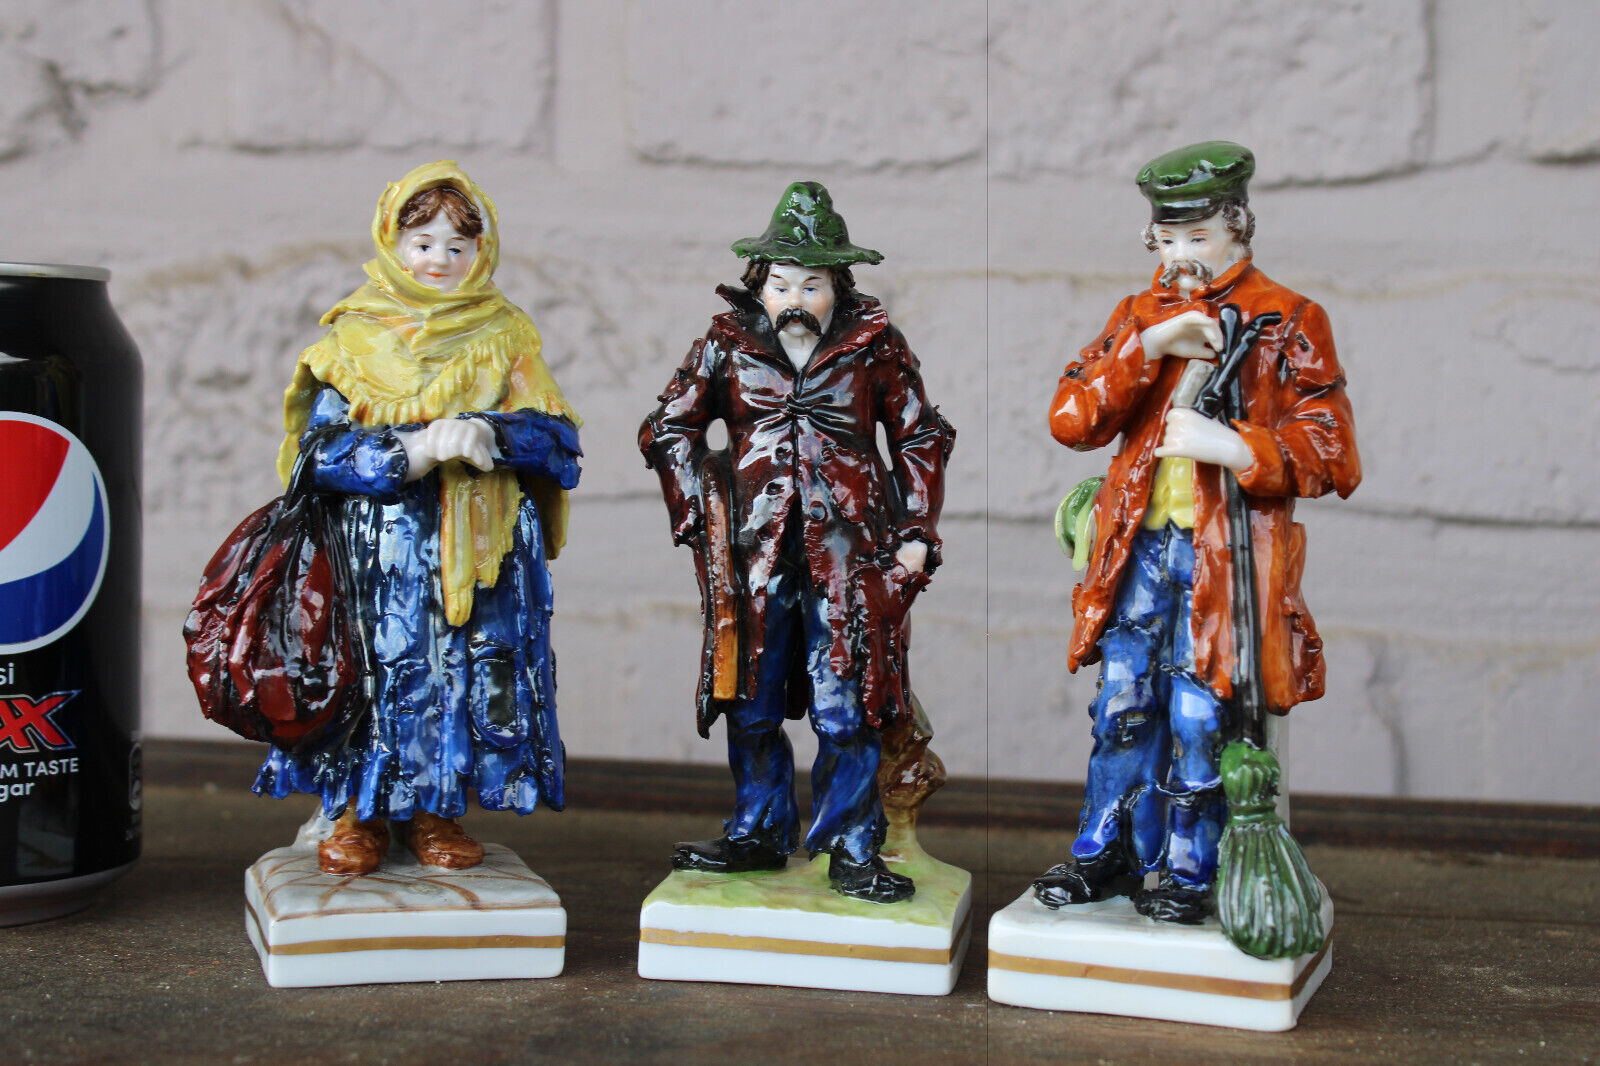 German scheibe alsbach marked porcelain clochard family statue figurines